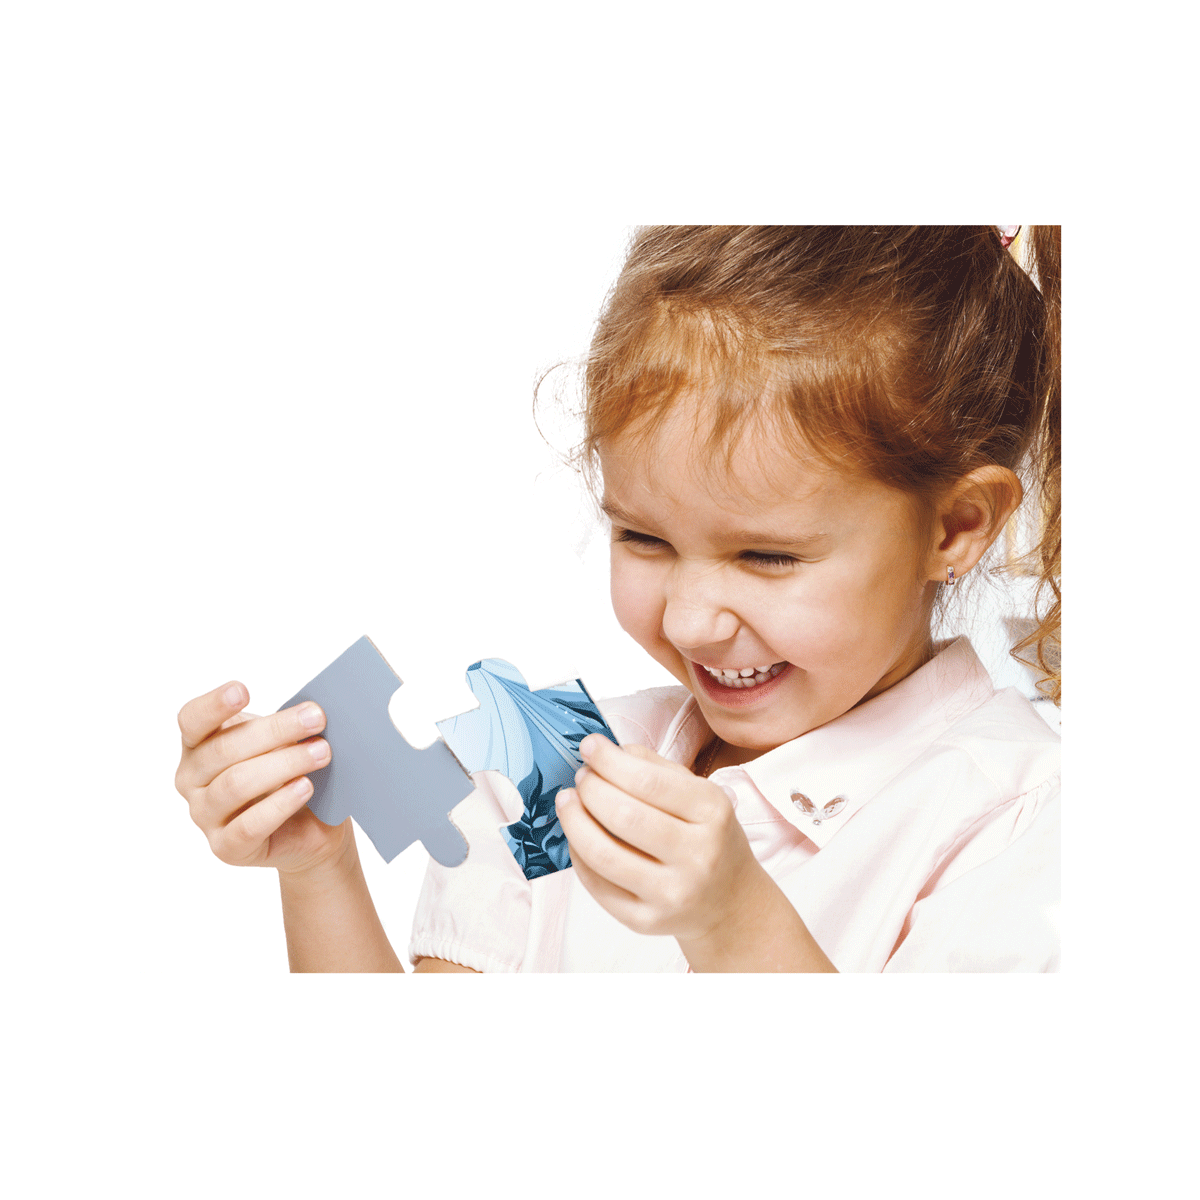 Clementoni supercolor puzzle gabby's dollhouse - 24 maxi pezzi, puzzle bambini 3 anni - CLEMENTONI, GABBY'S DOLLHOUSE